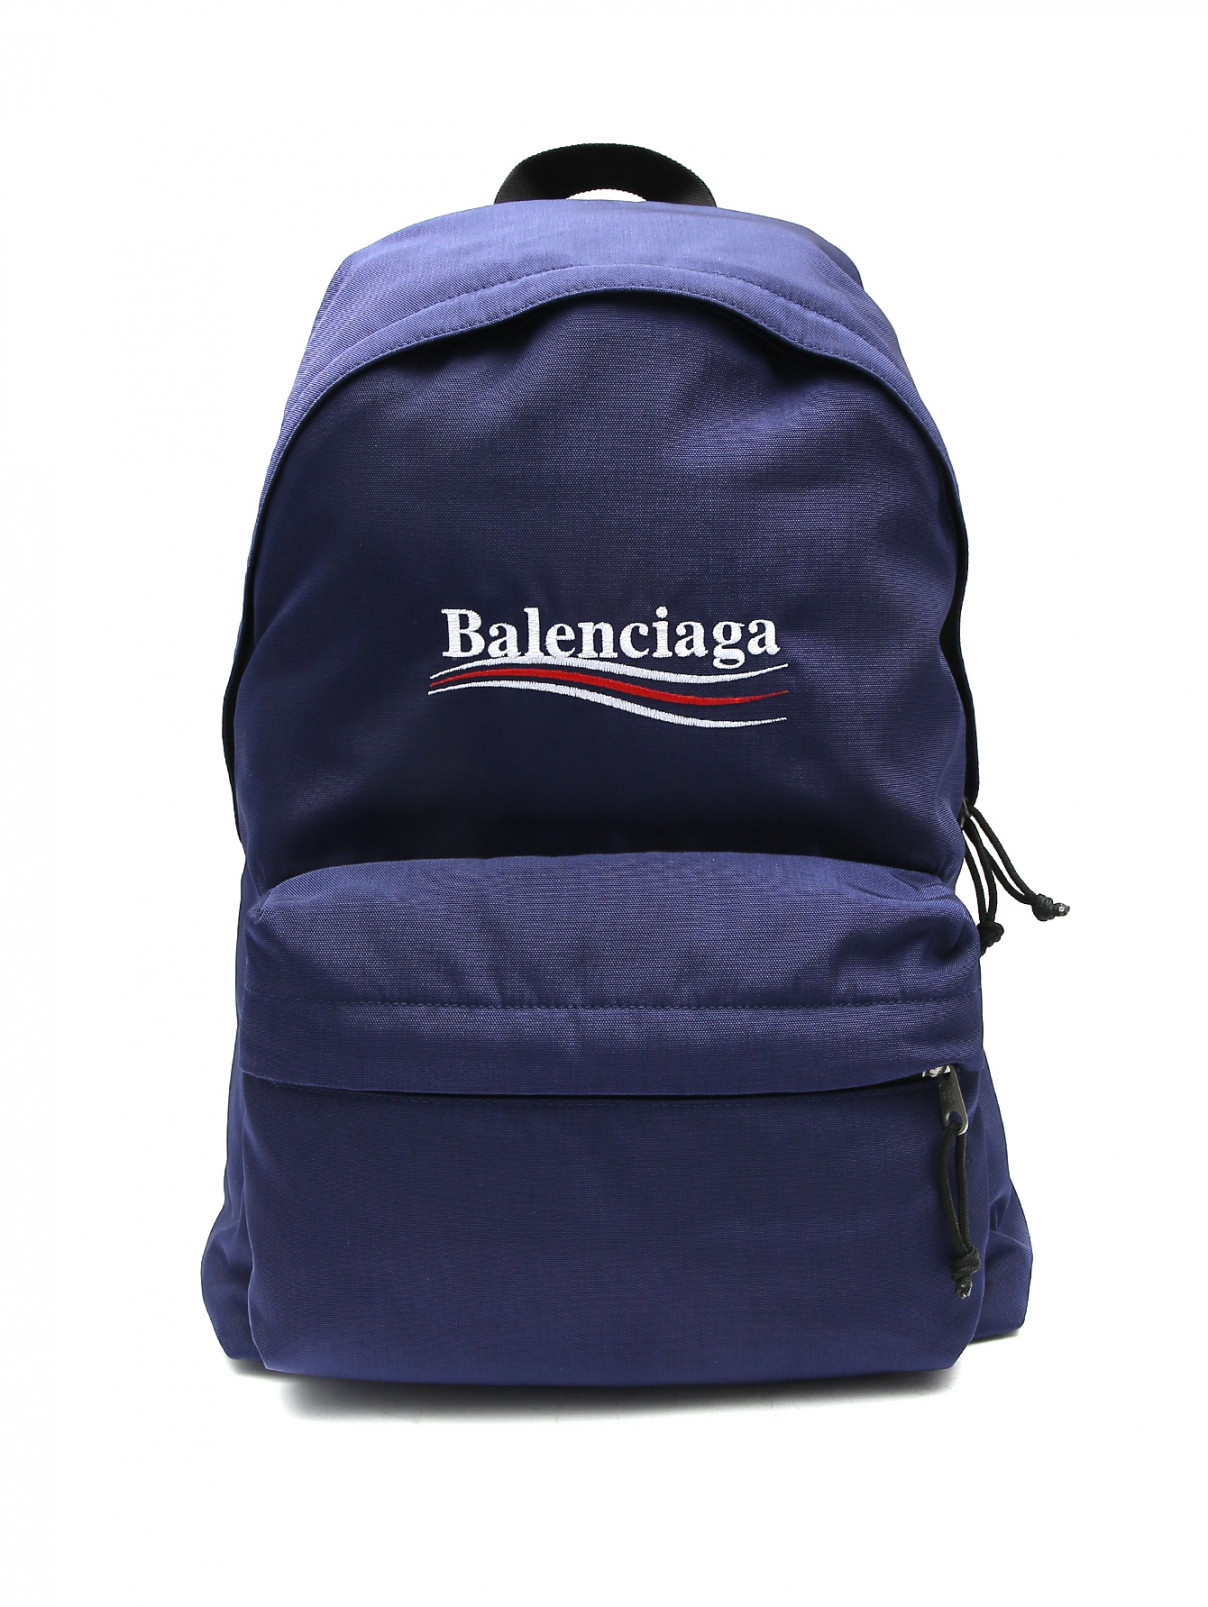 Рюкзак с узором Balenciaga  –  Общий вид  – Цвет:  Синий